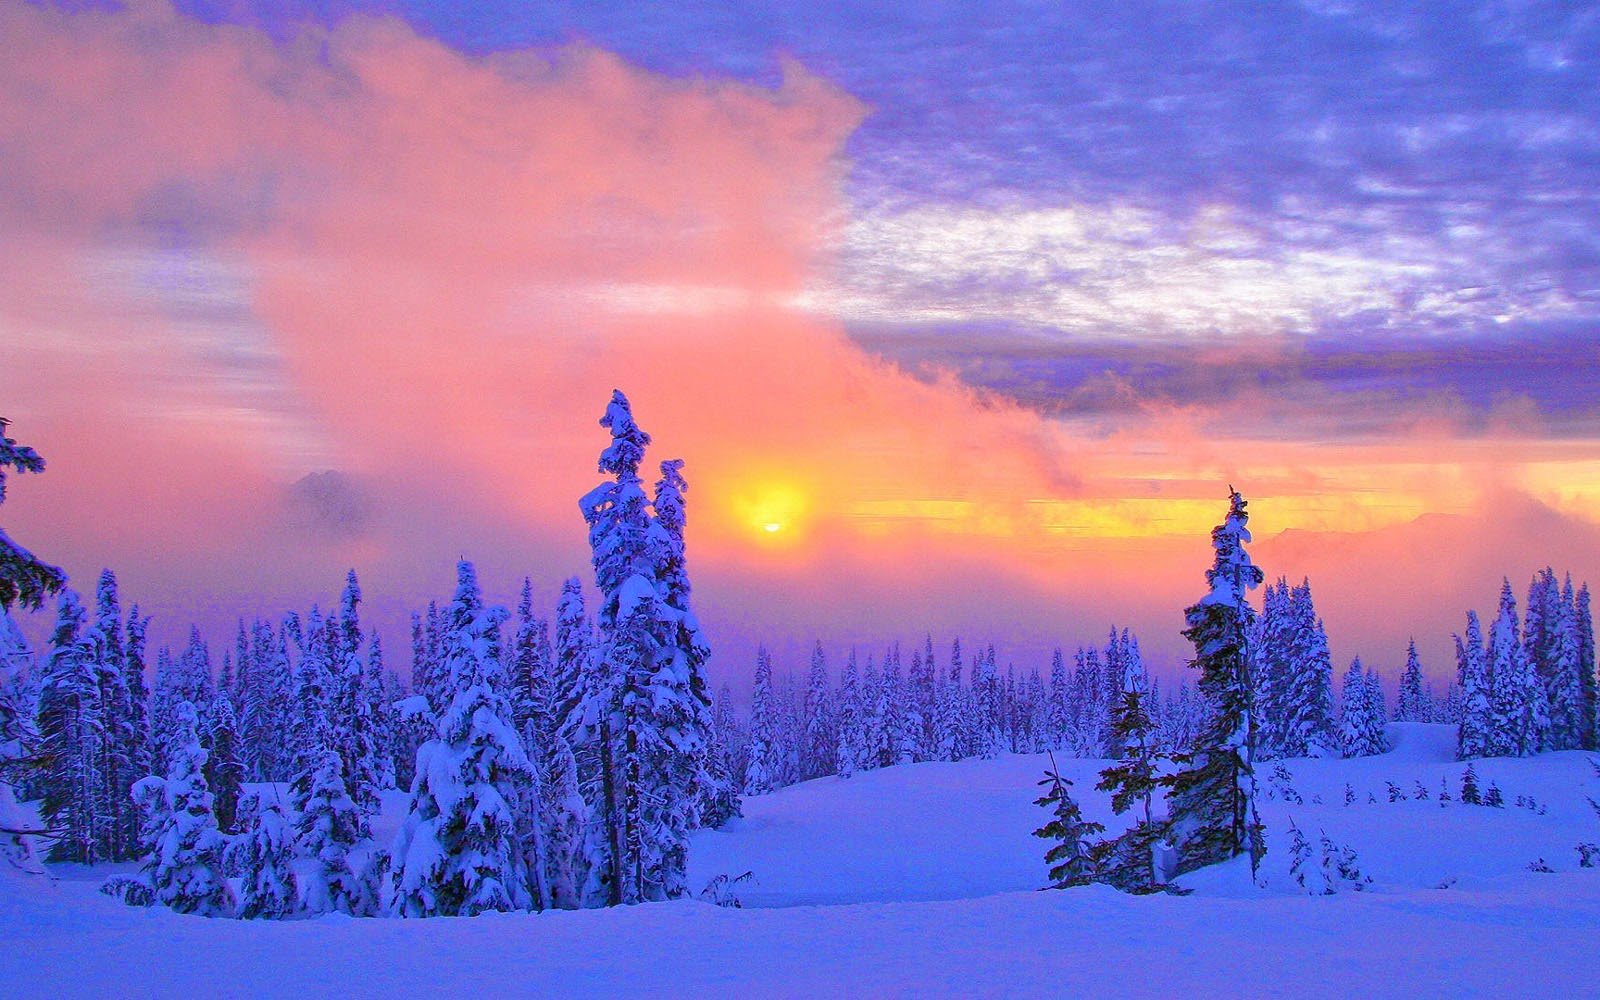 Free download wallpapers beautiful winter scenery desktop ...